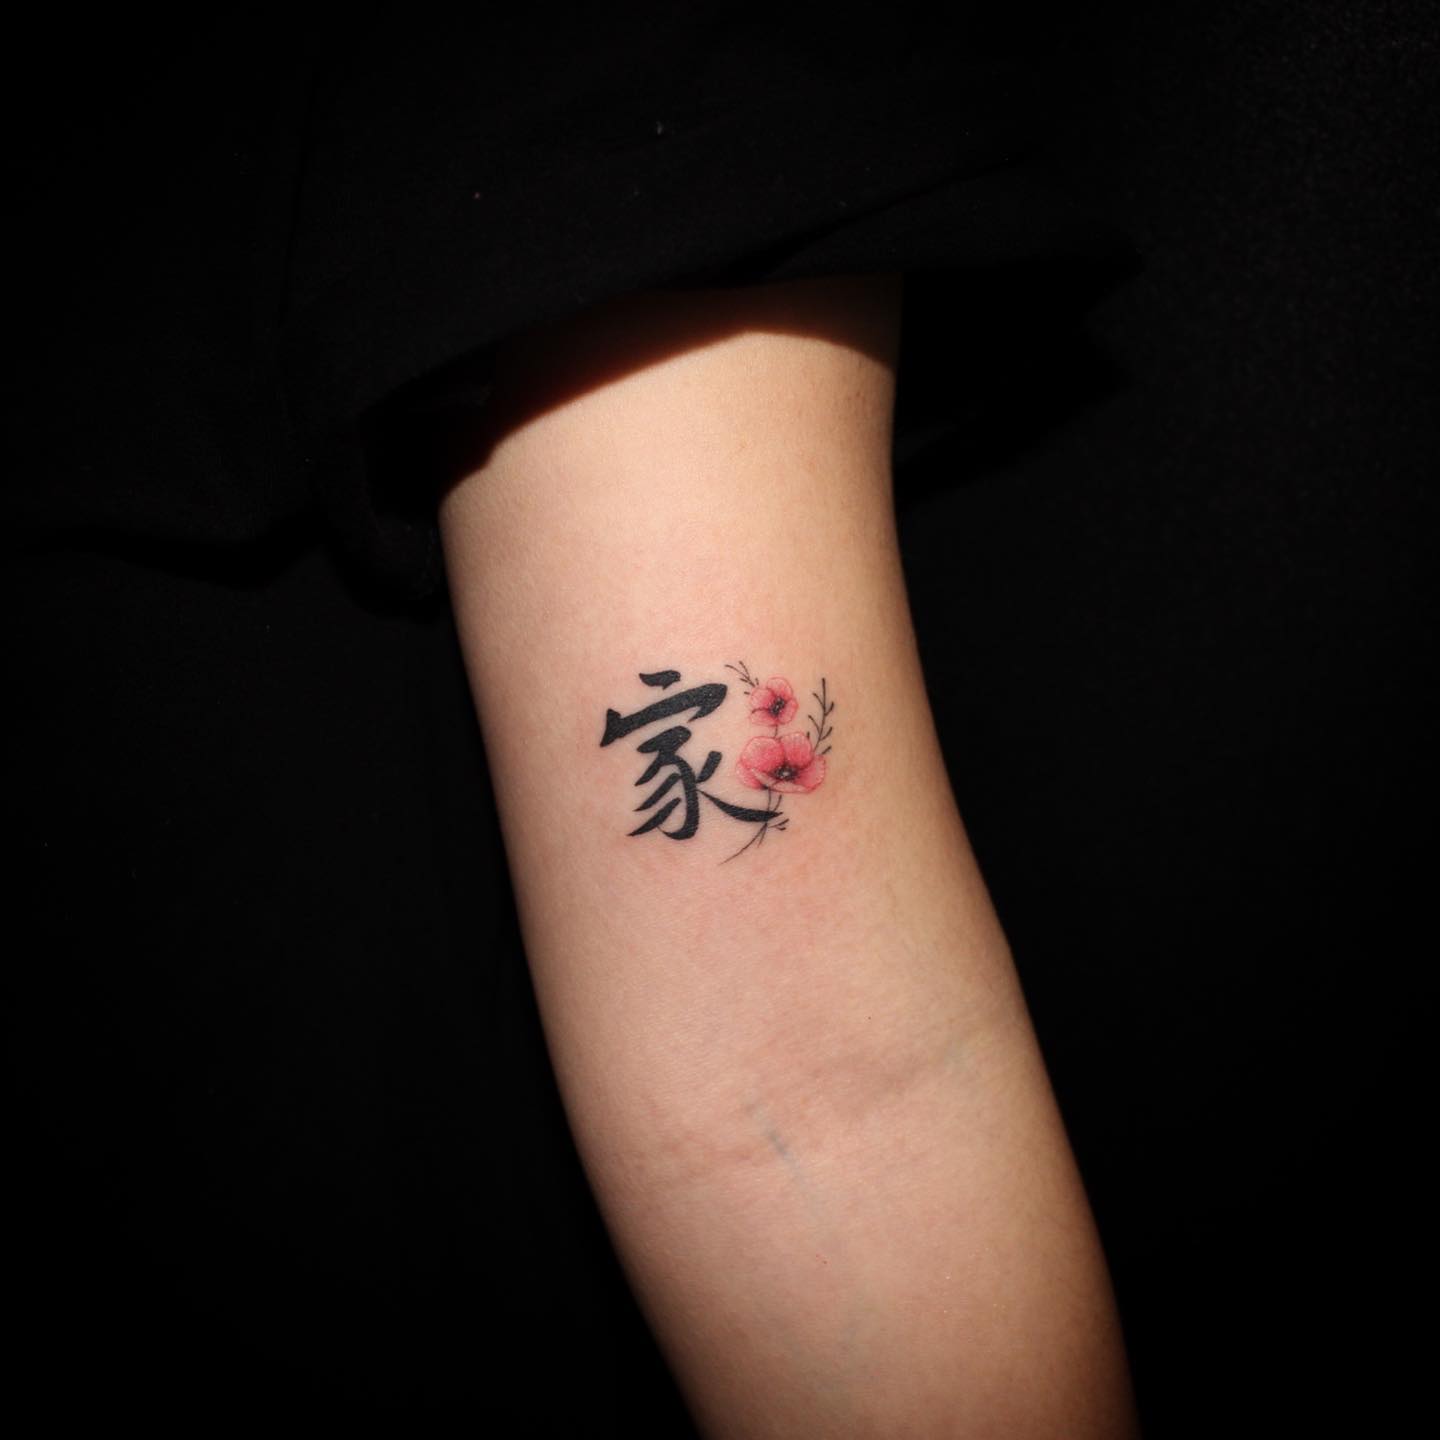 Tatuaje de letra china con flor de amapola.